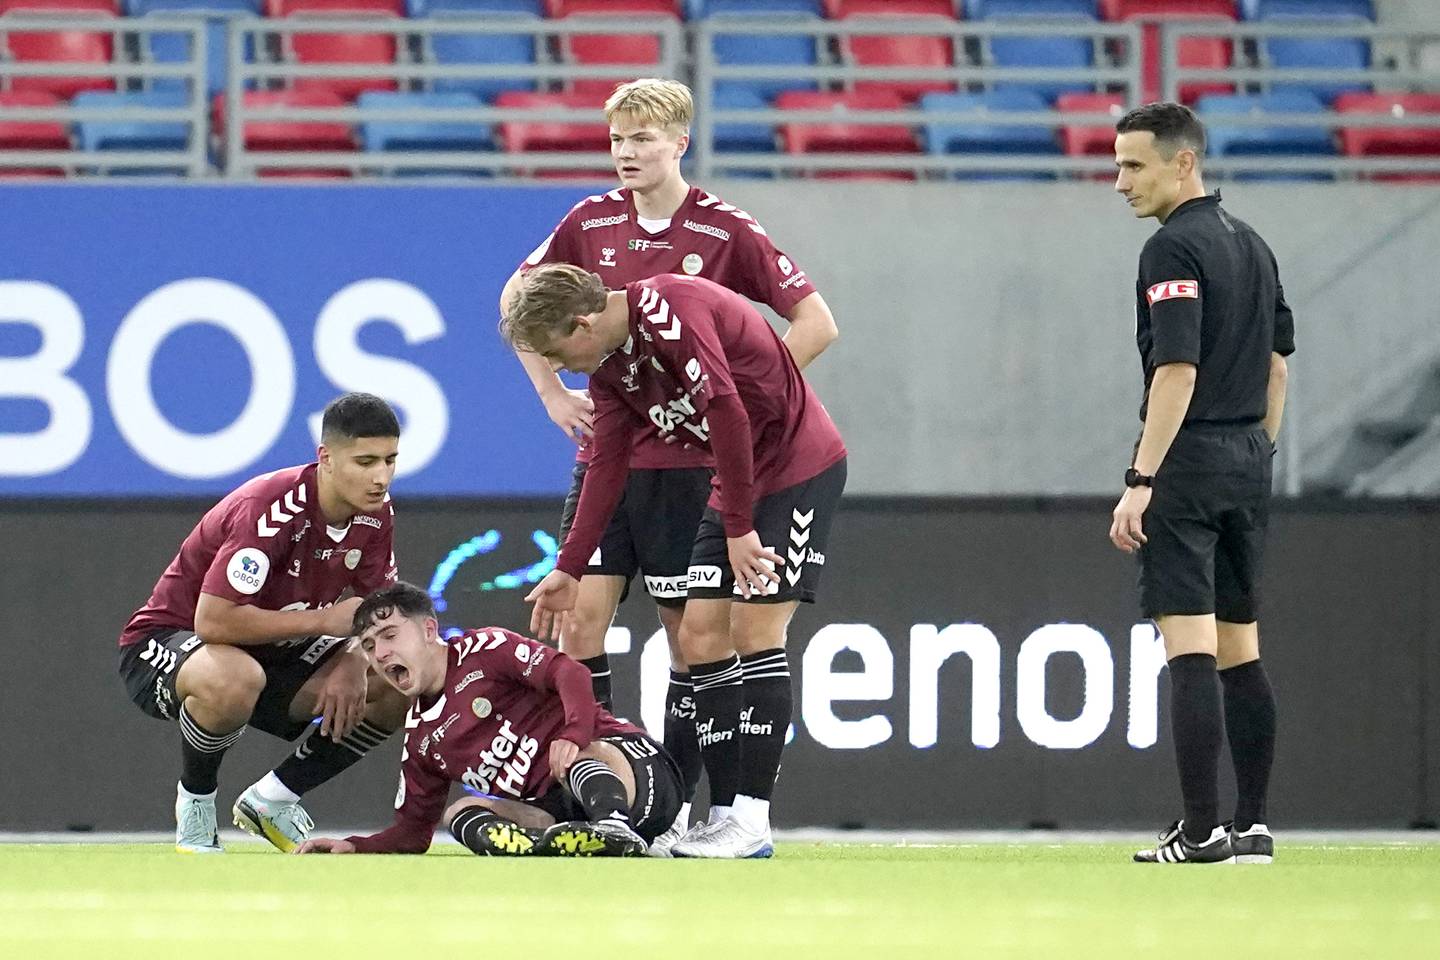 Hoveddommer Ajdin Medic i aksjon da Sandnes Ulfs Artan Memedov blir skadet under cupfinalen for juniorer mot Molde  på Intility Arena i november.